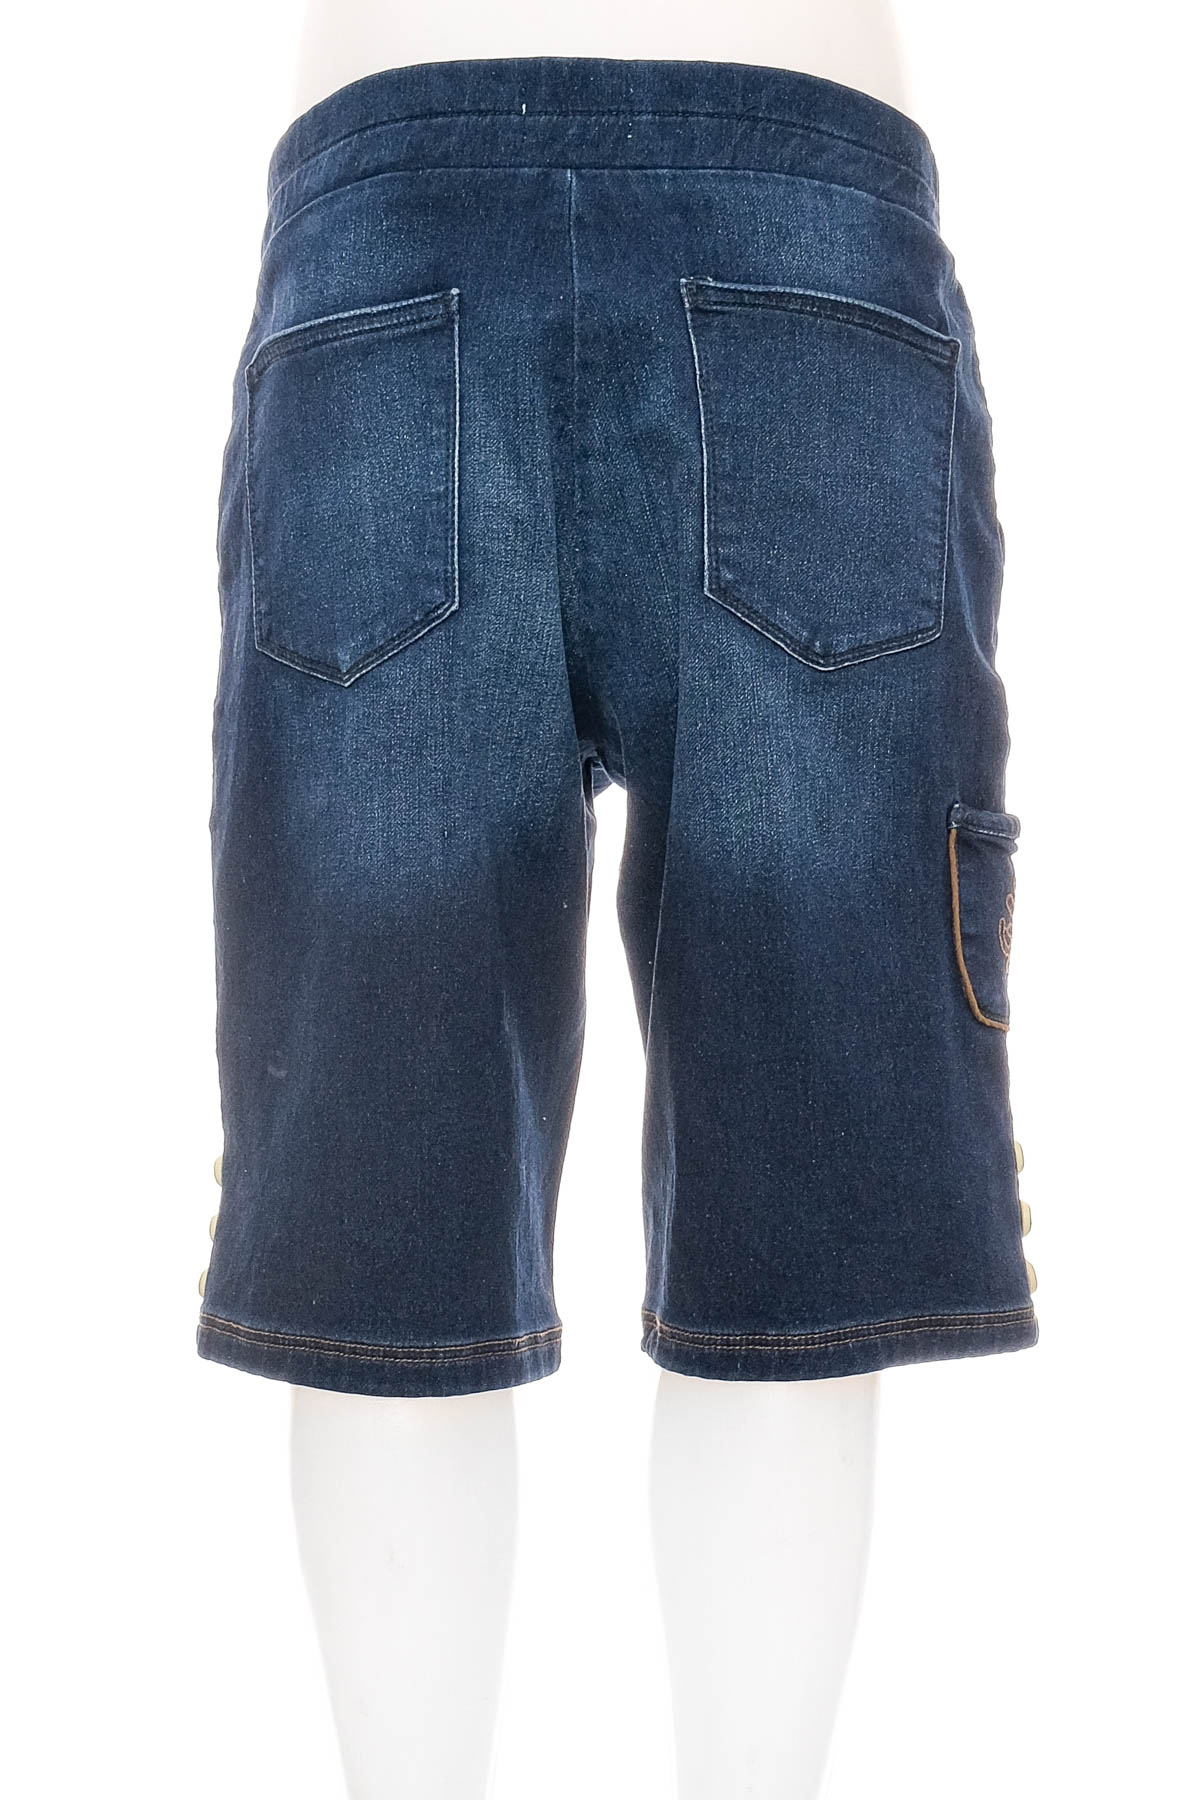 Men's shorts - Waldschutz - 1